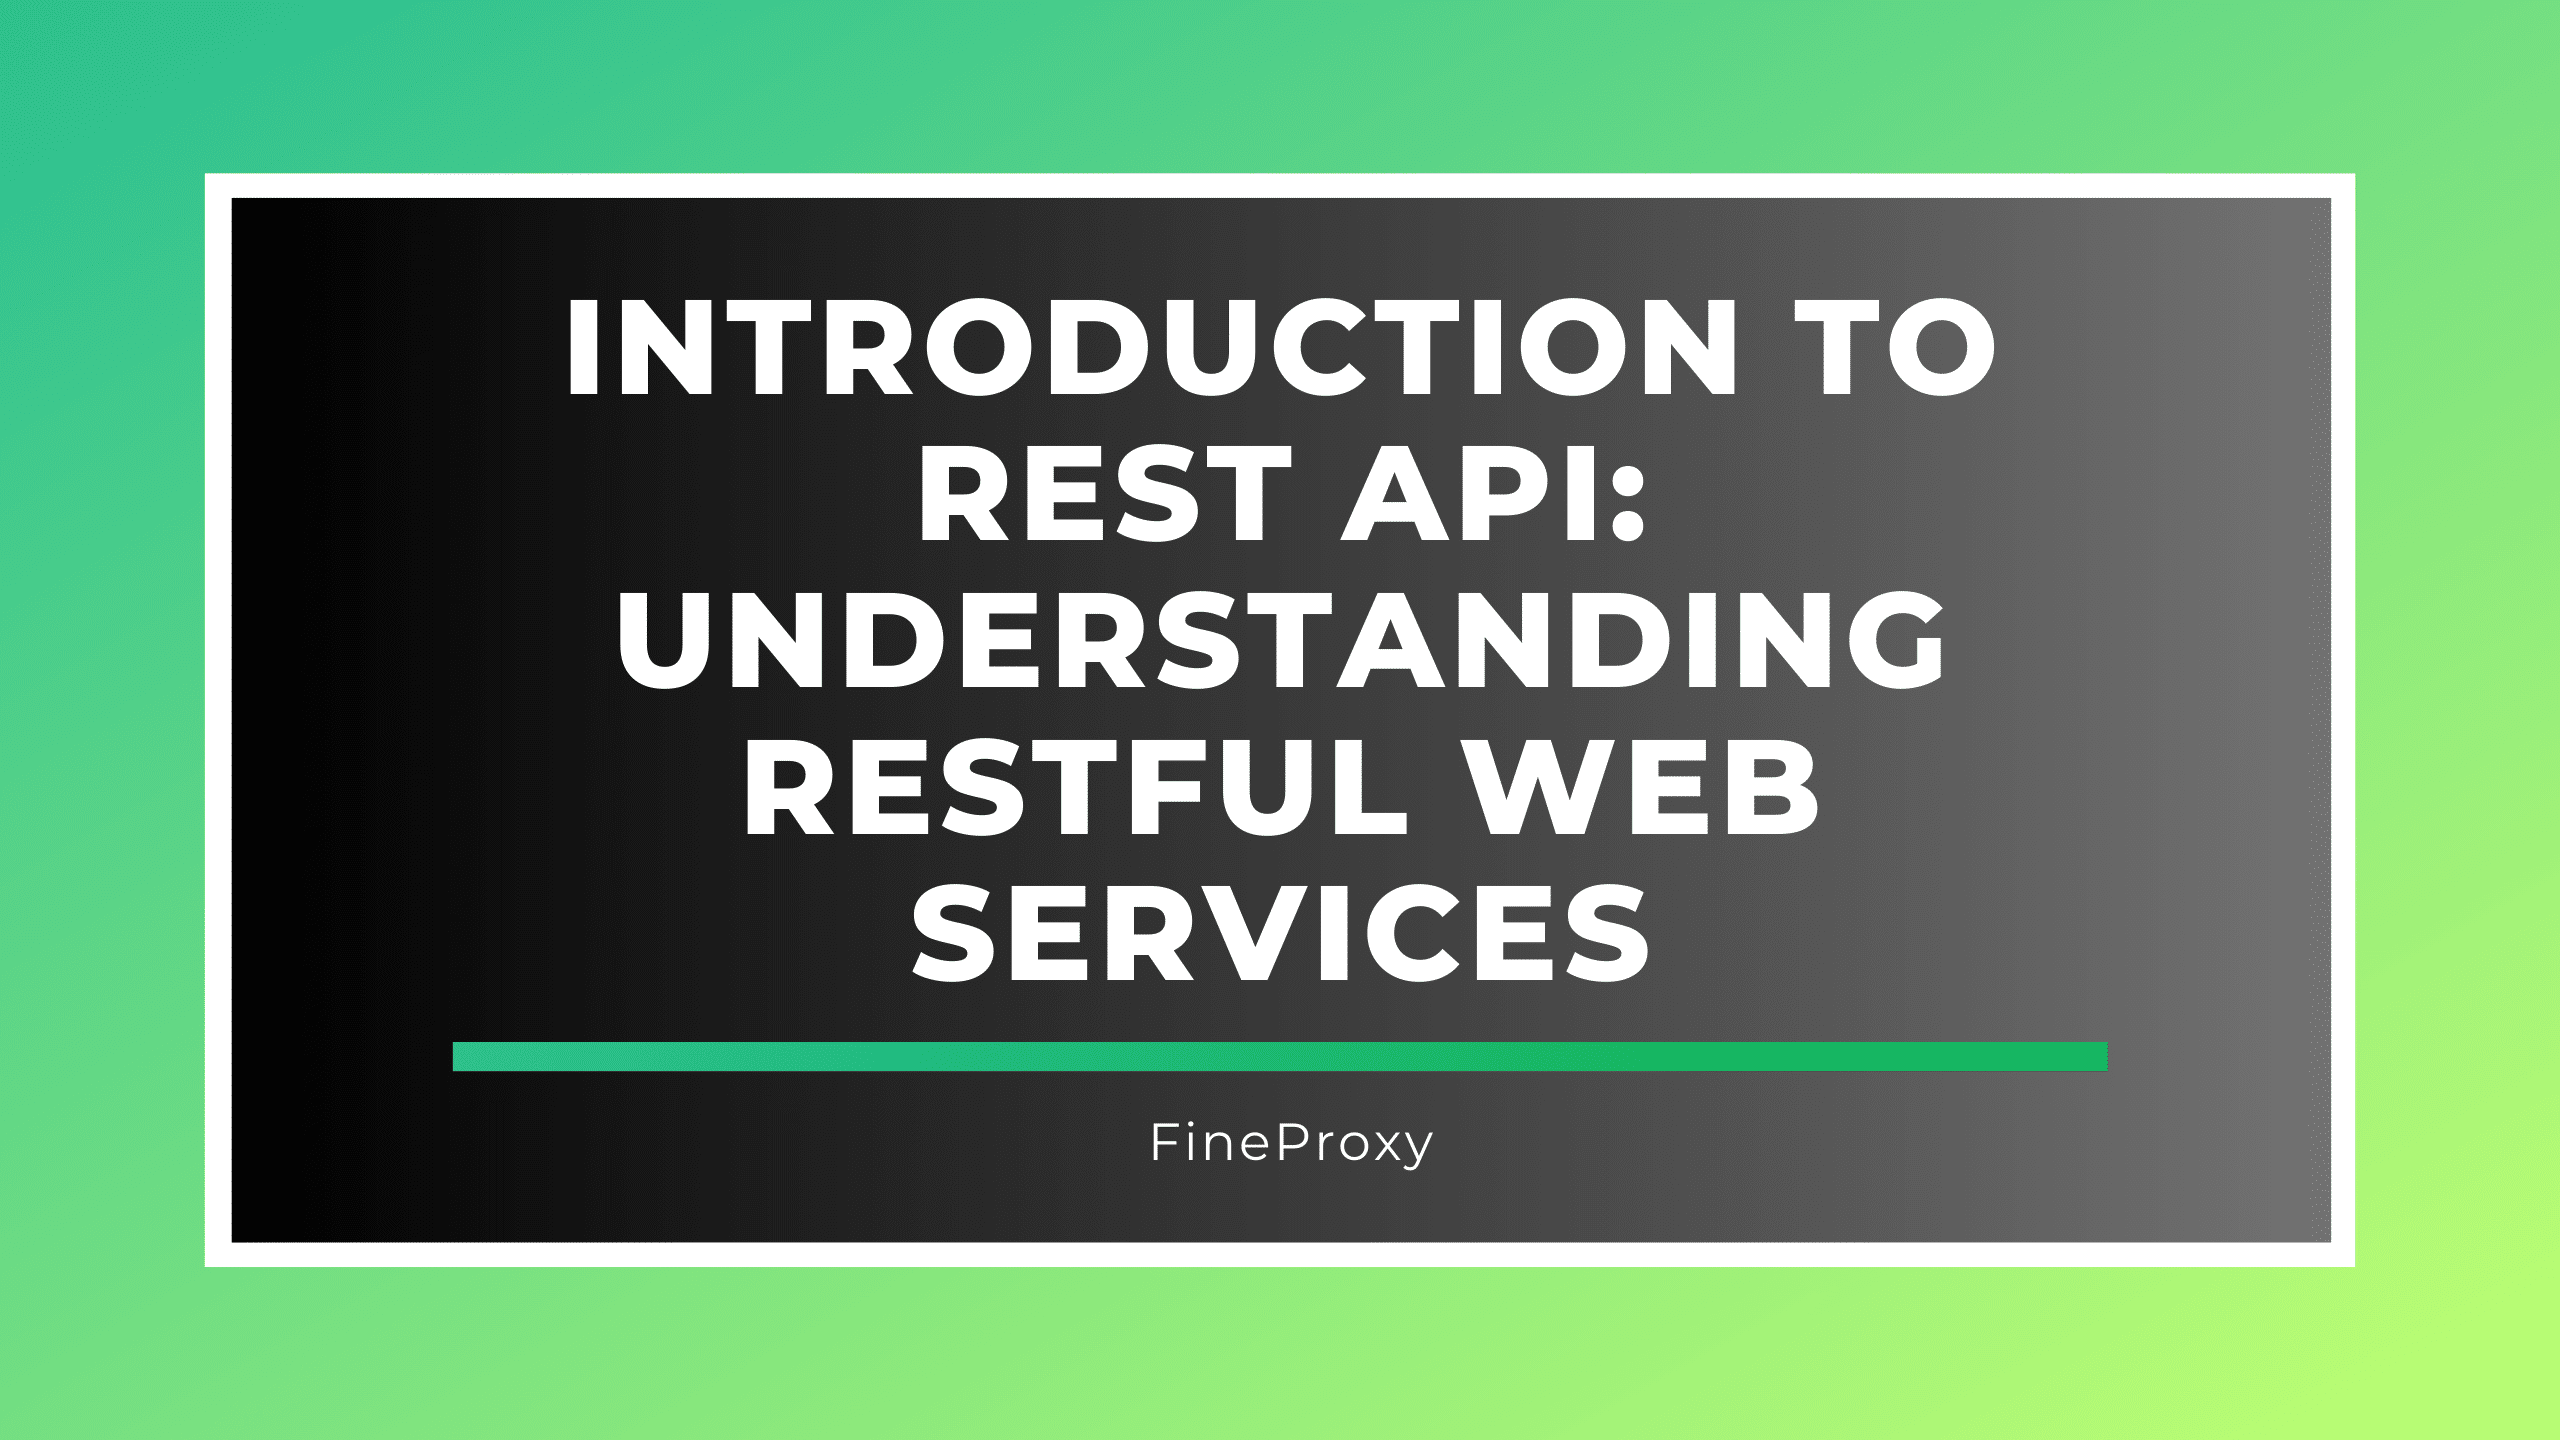 REST API-യുടെ ആമുഖം: RESTful Web Services മനസ്സിലാക്കുന്നു